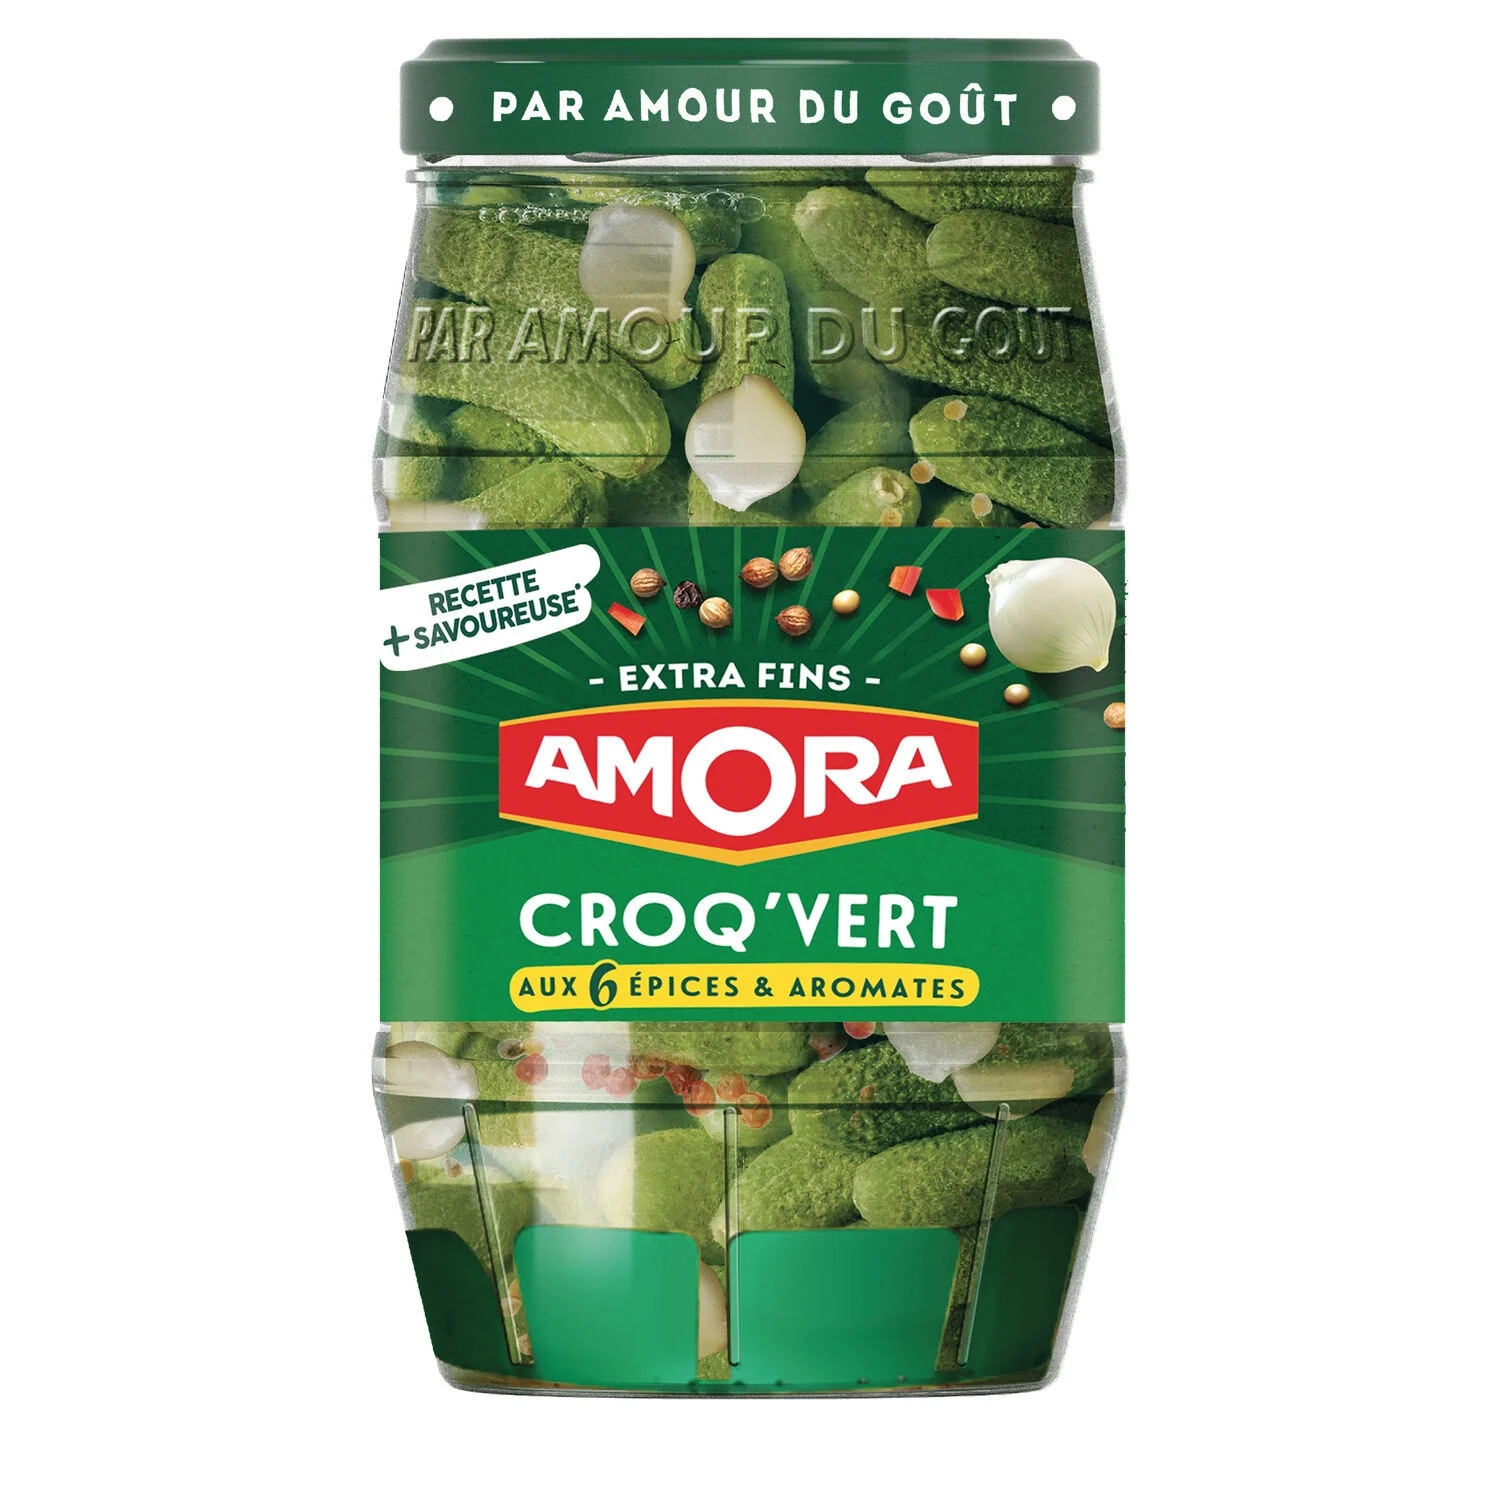 210g Amora Croqvert Extra-fins